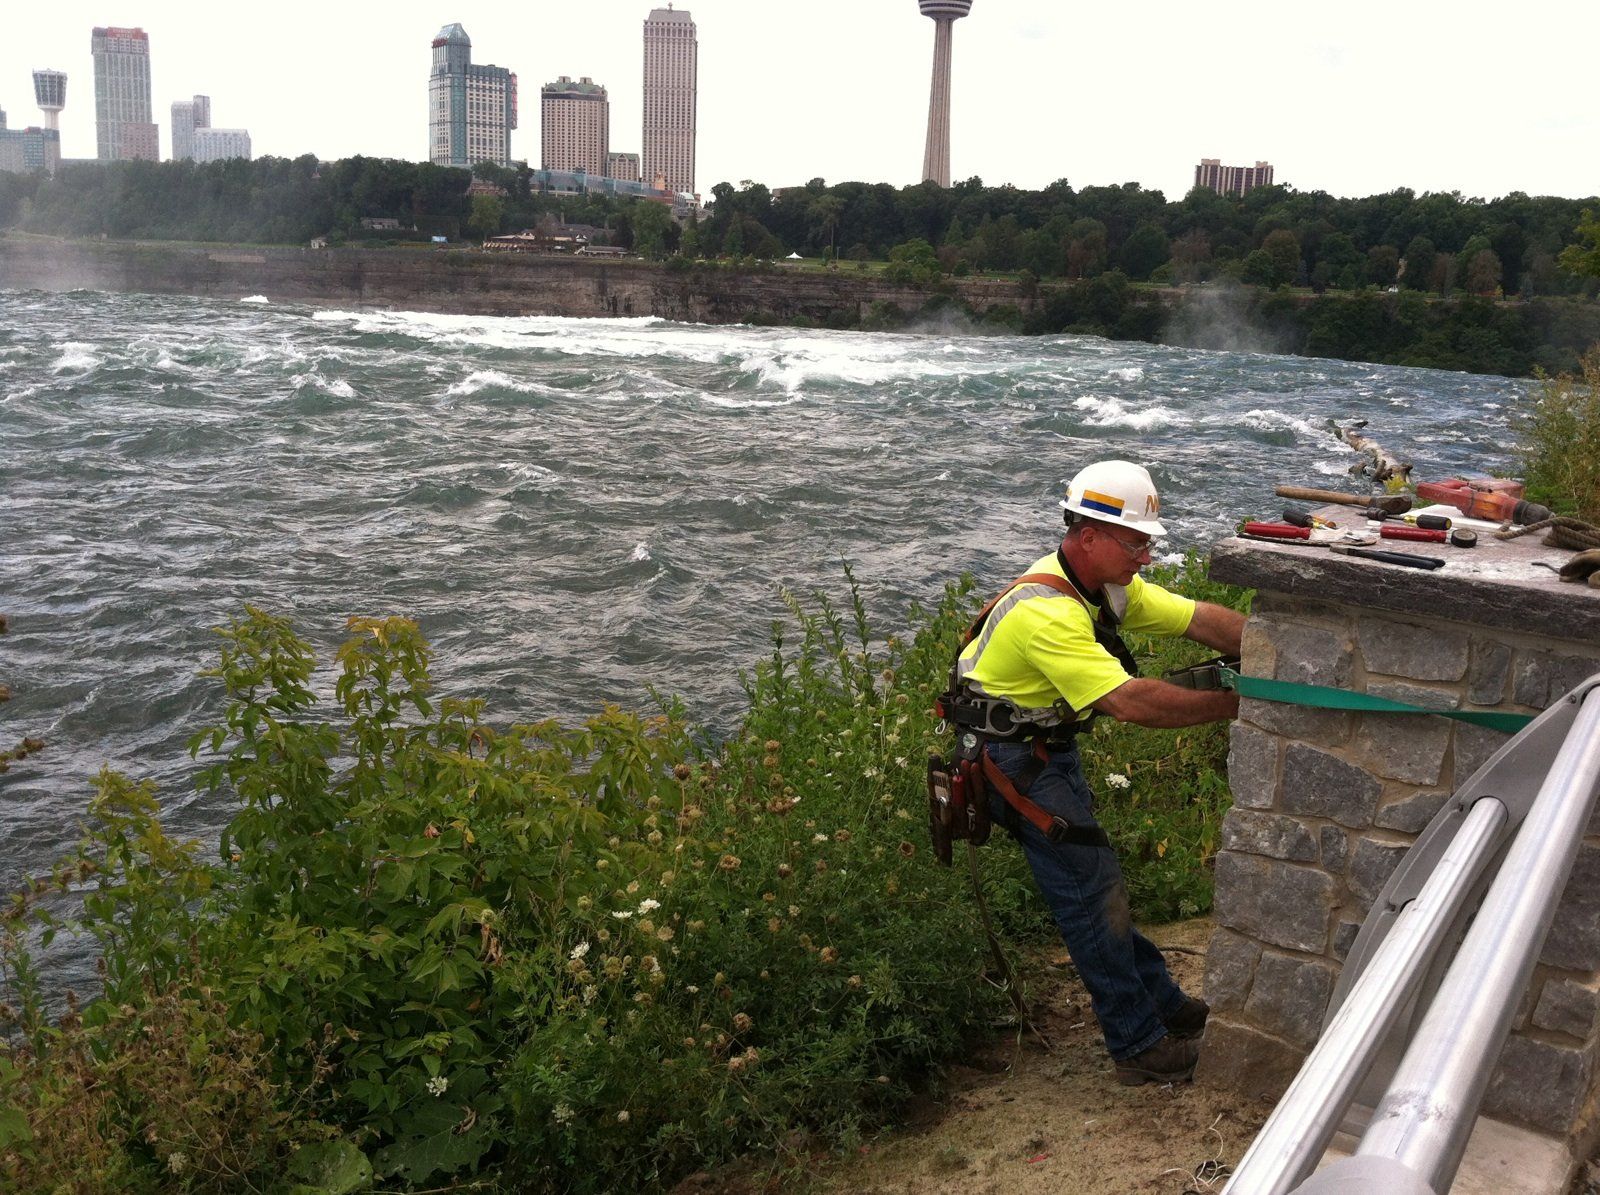 electrical work done near Niagara River in Niagara Falls, NY